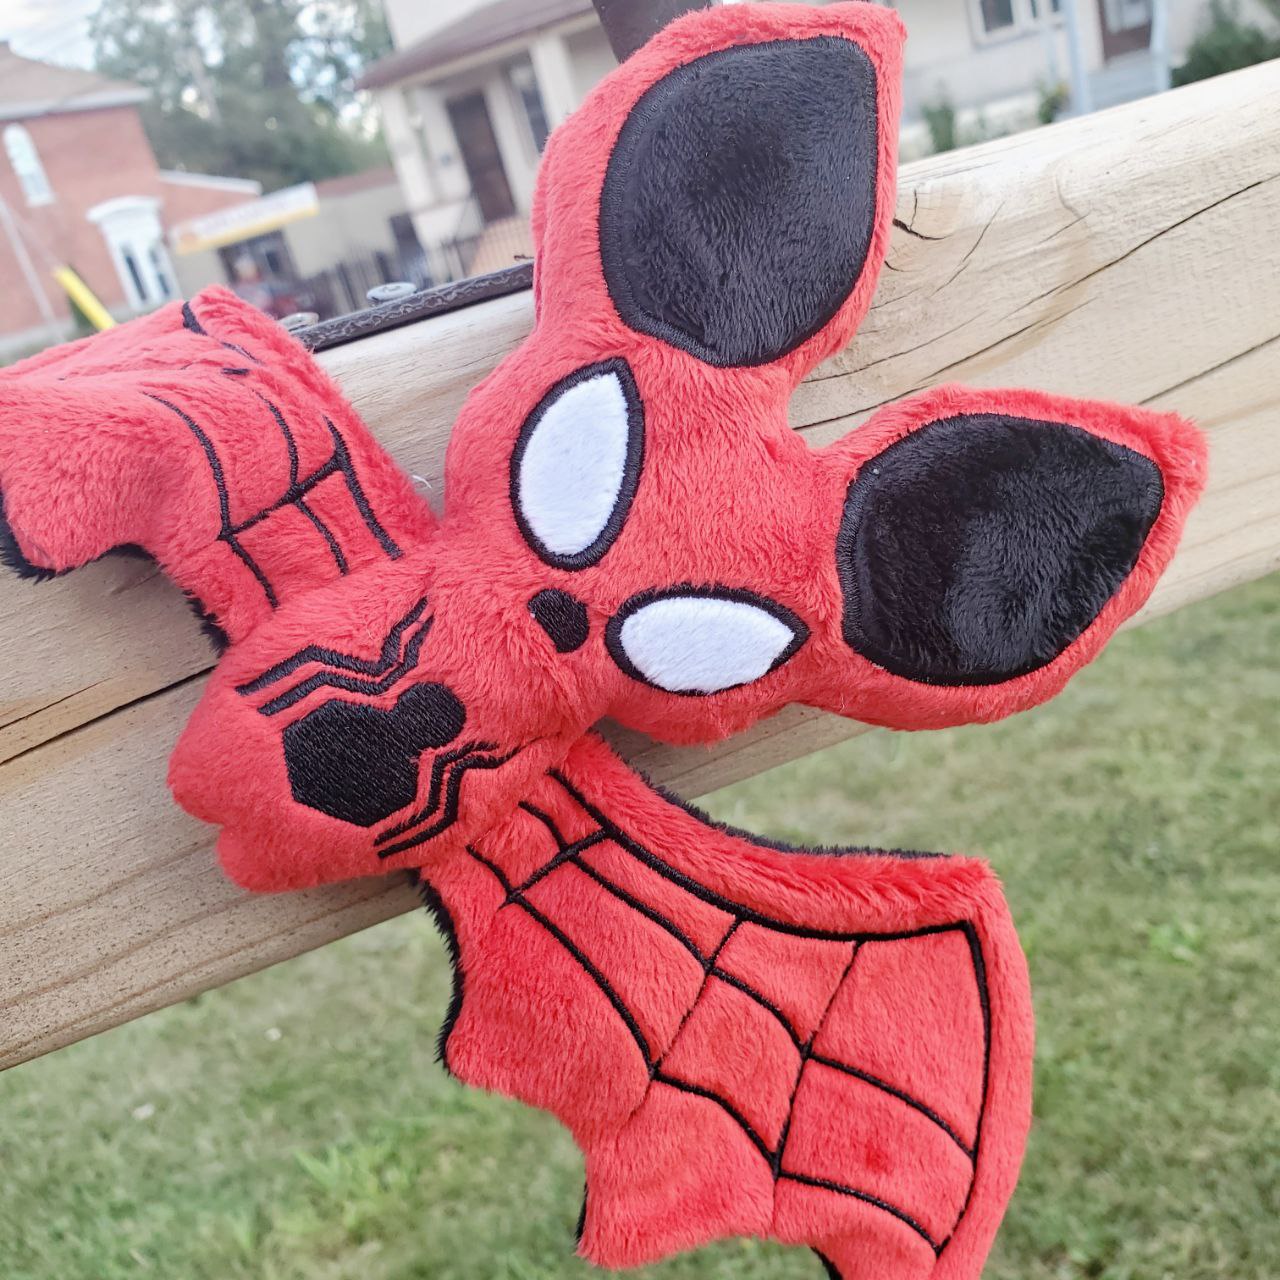 spider-man inspired bat plushie